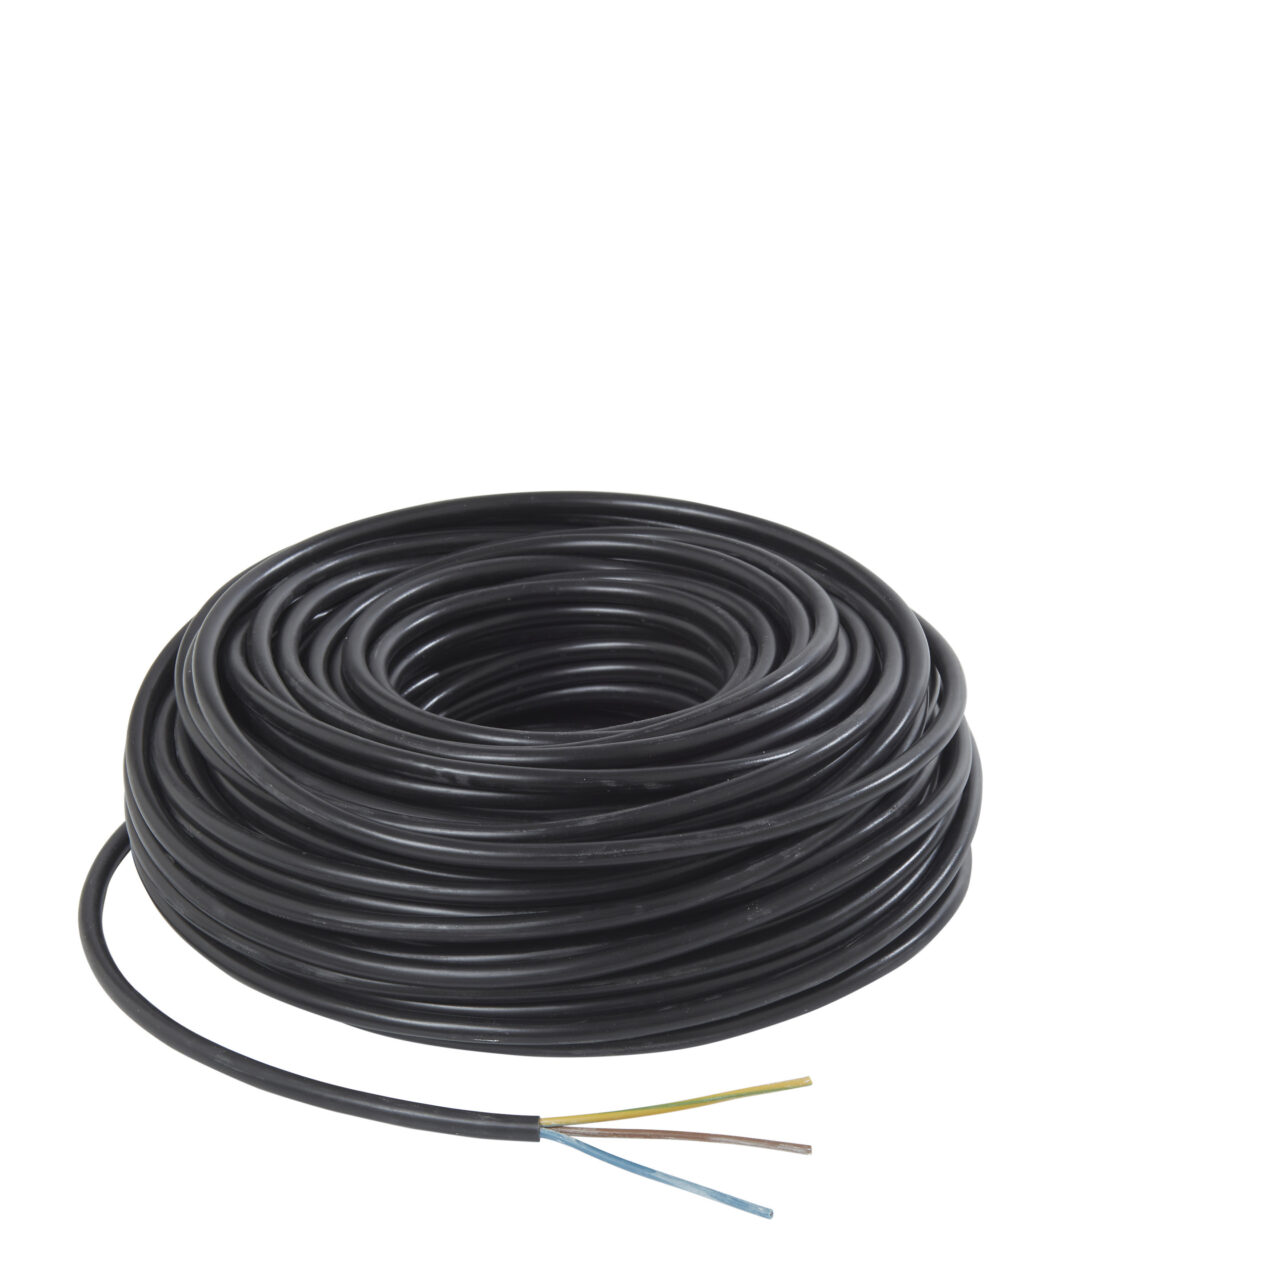 2.5mm x 3 Core YY Cable Per Metre